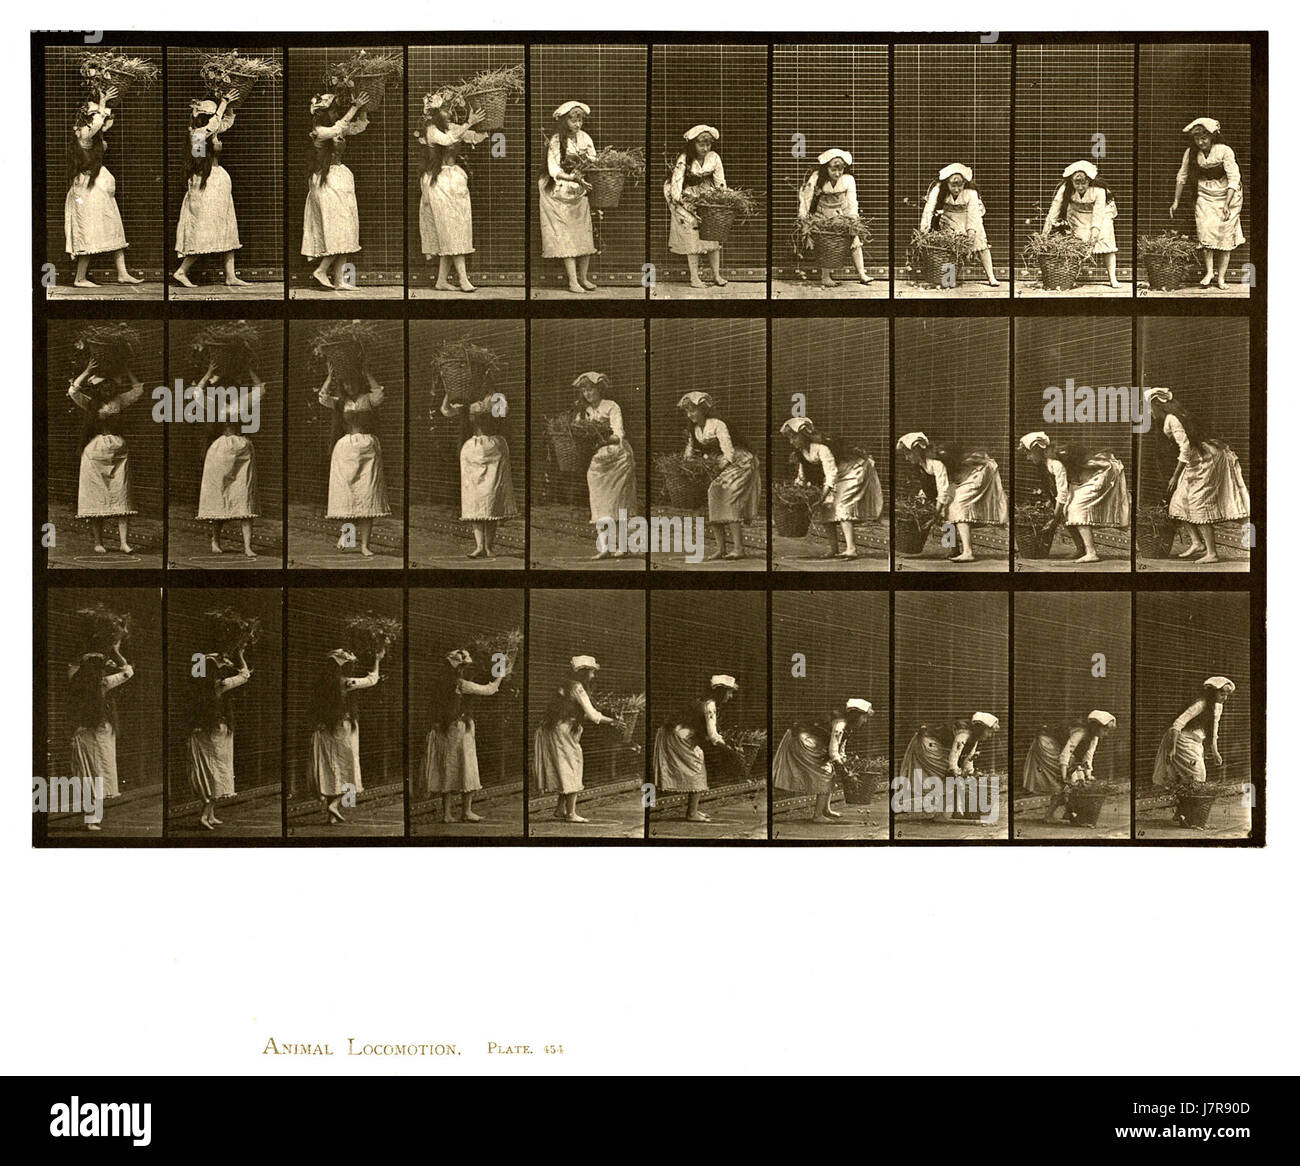 Animal locomotion. Plate 454 (Boston Public Library) Stock Photo